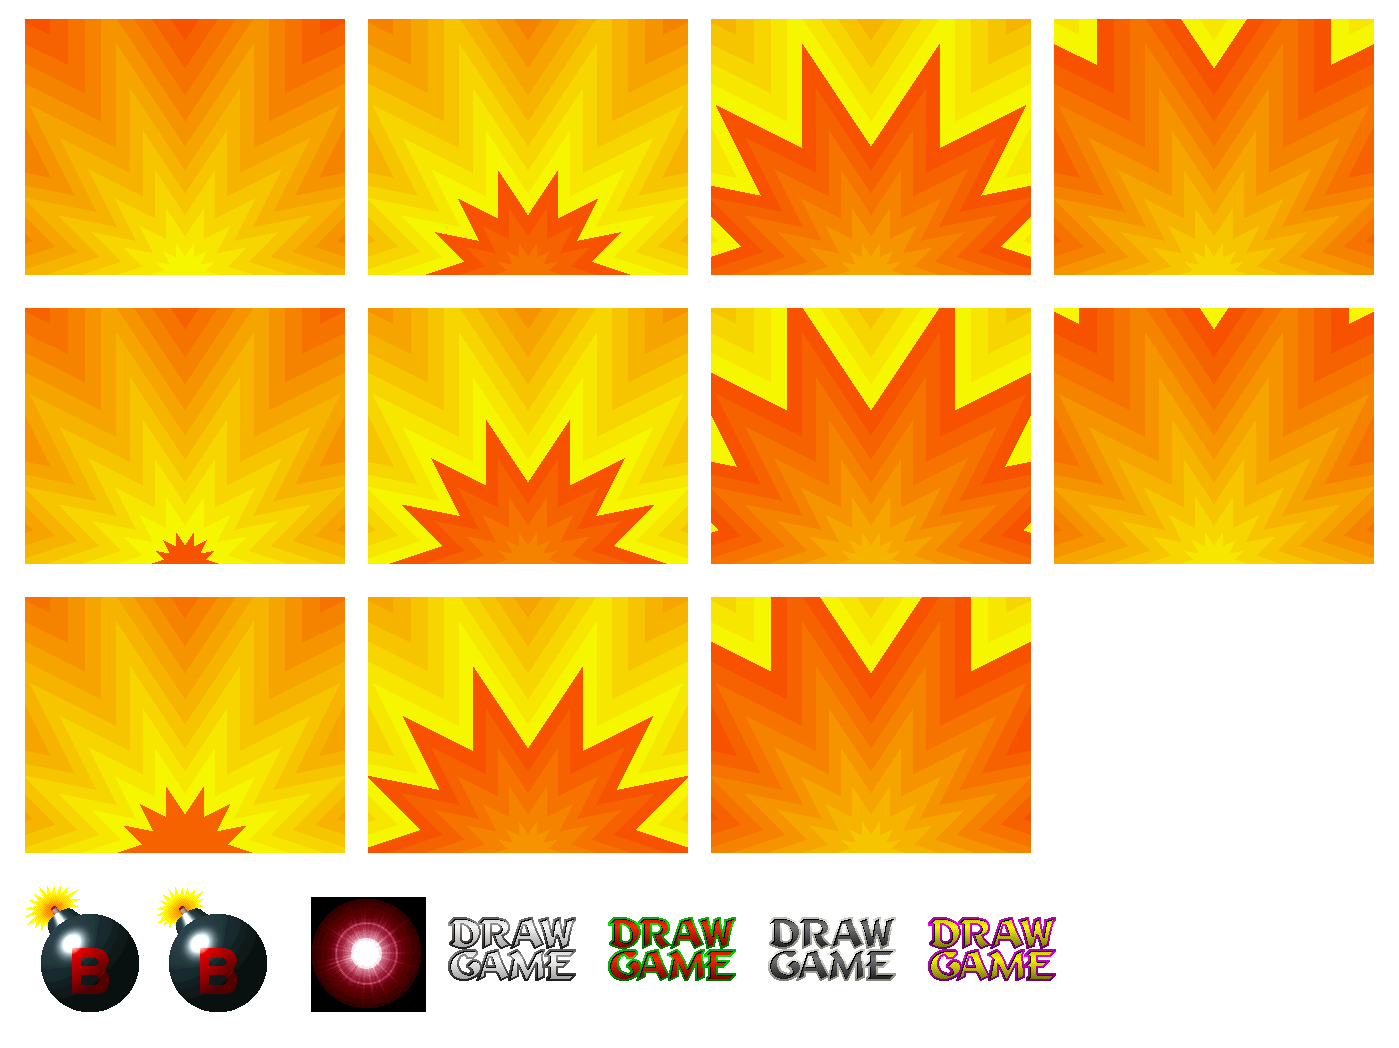 Bomberman World - Draw Game